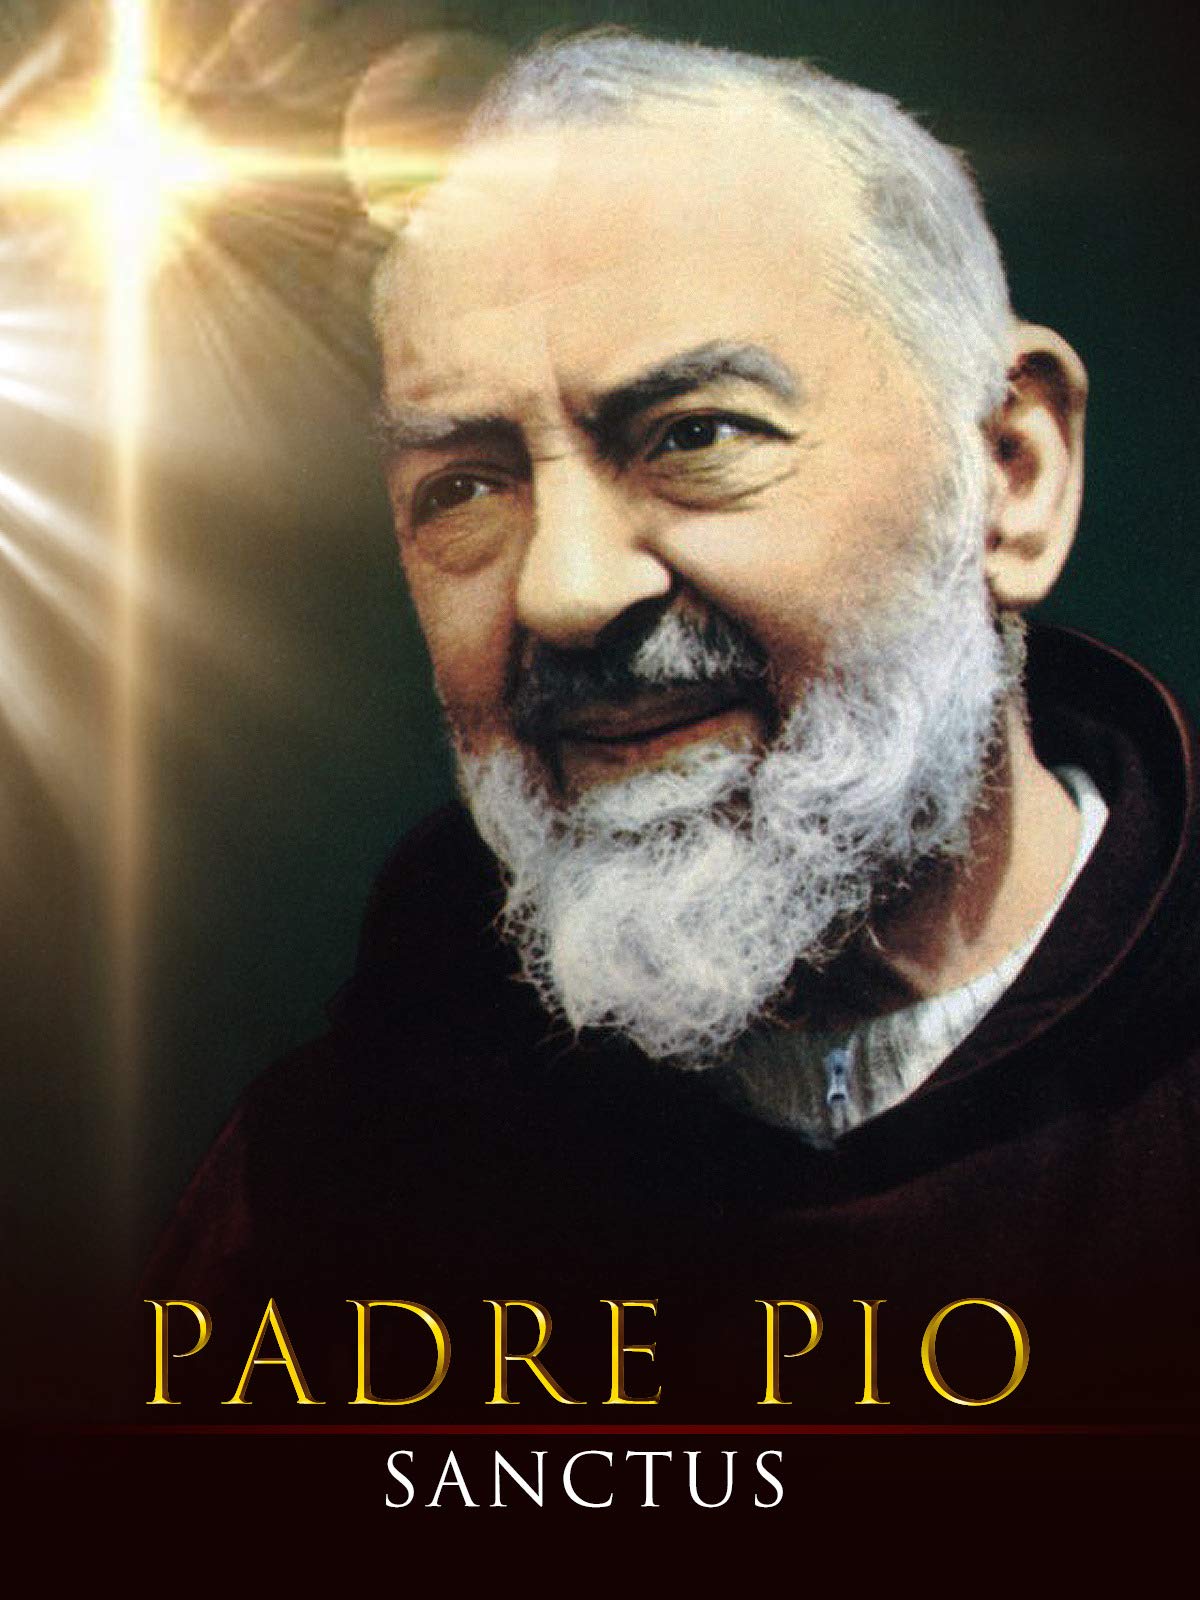 Watch Padre Pio Sanctus